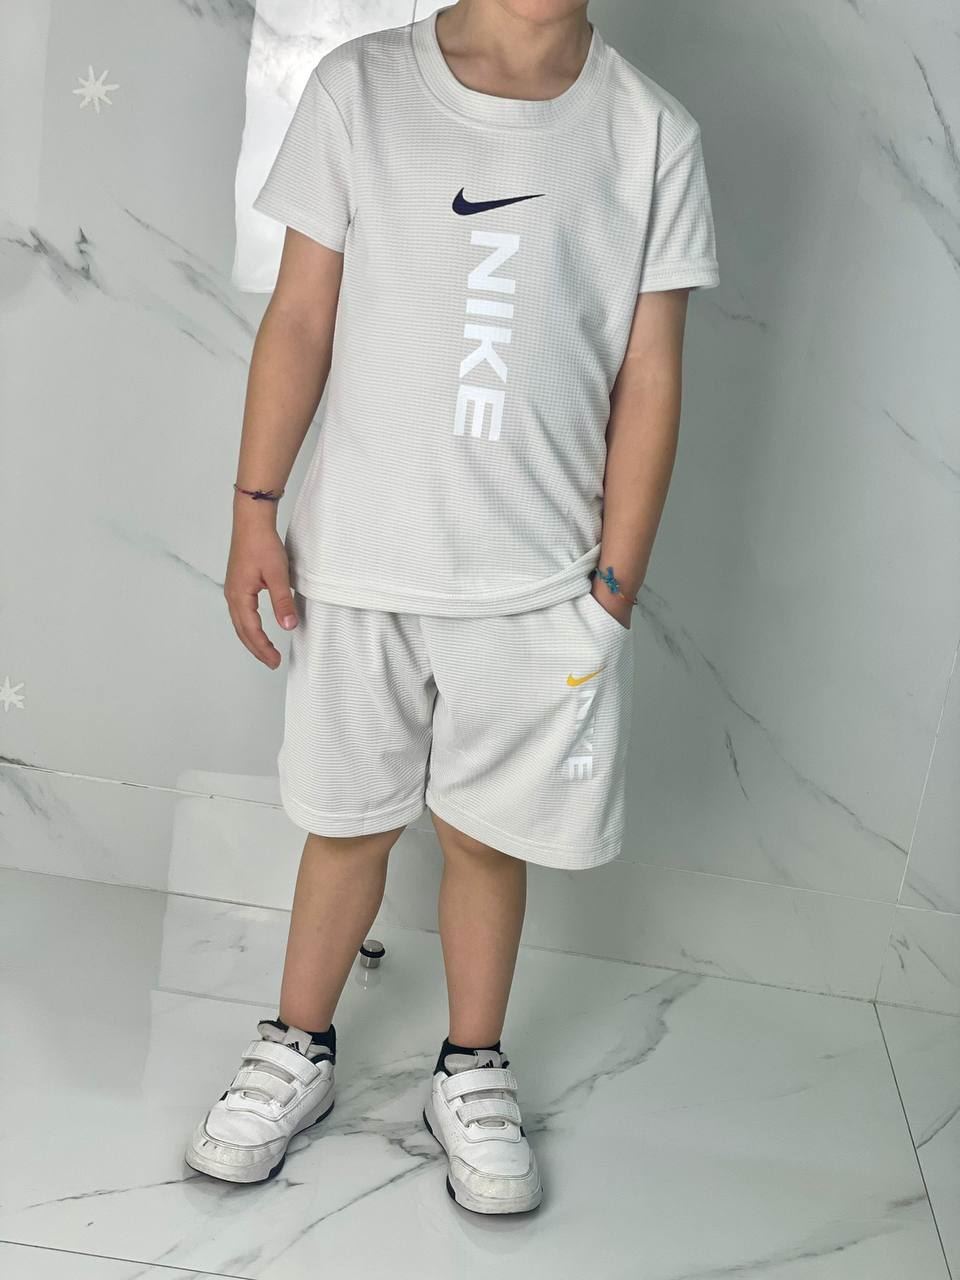 Conjunto de niño Nike - Imagen 6